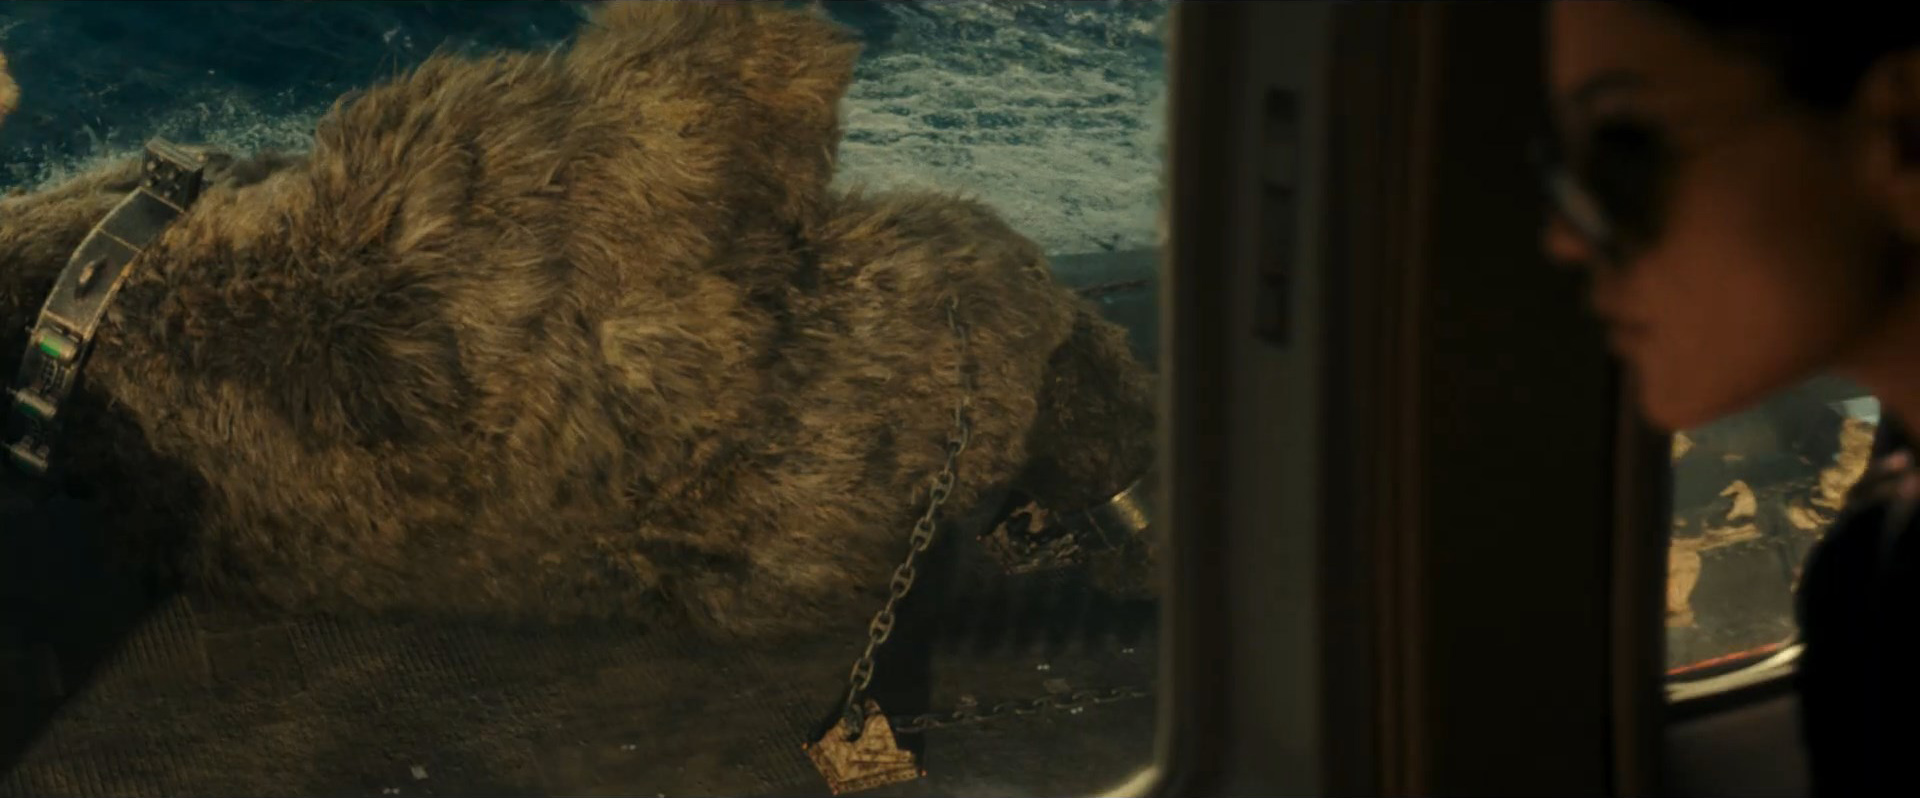 Godzilla vs Kong Trailer Still 04 - Kong in chains